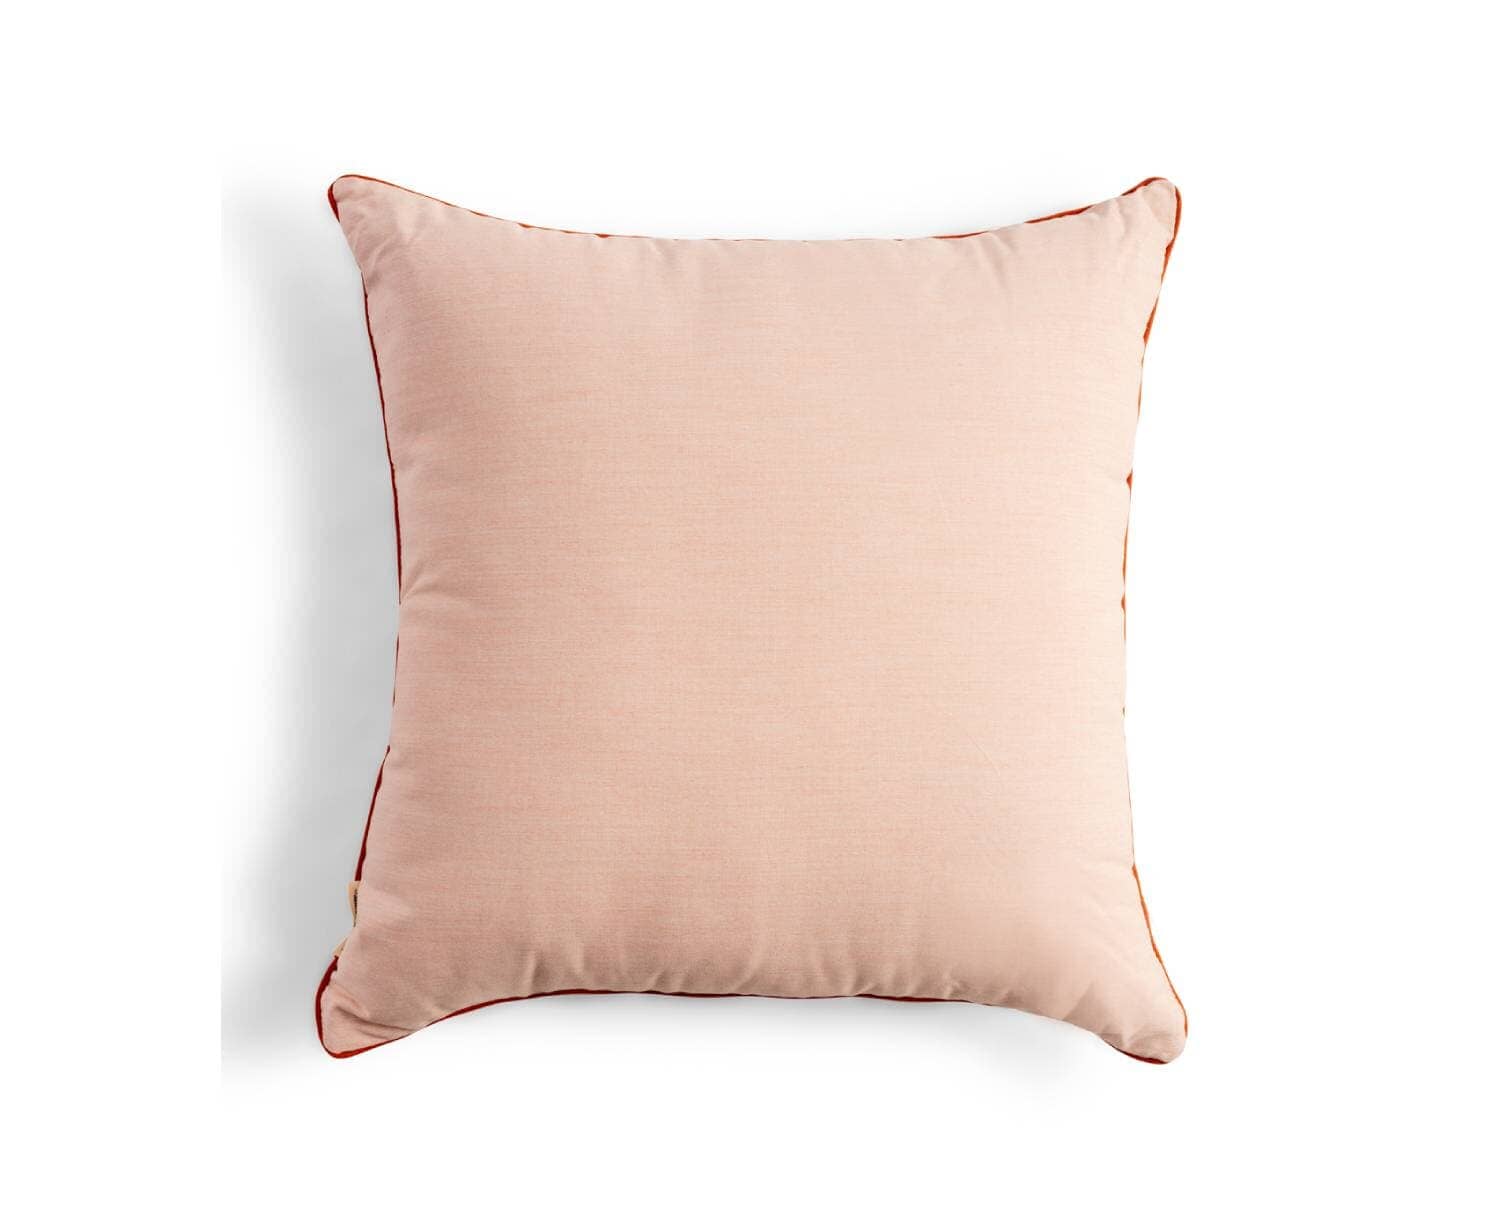 Studio image of riviera pink euro throw pillow